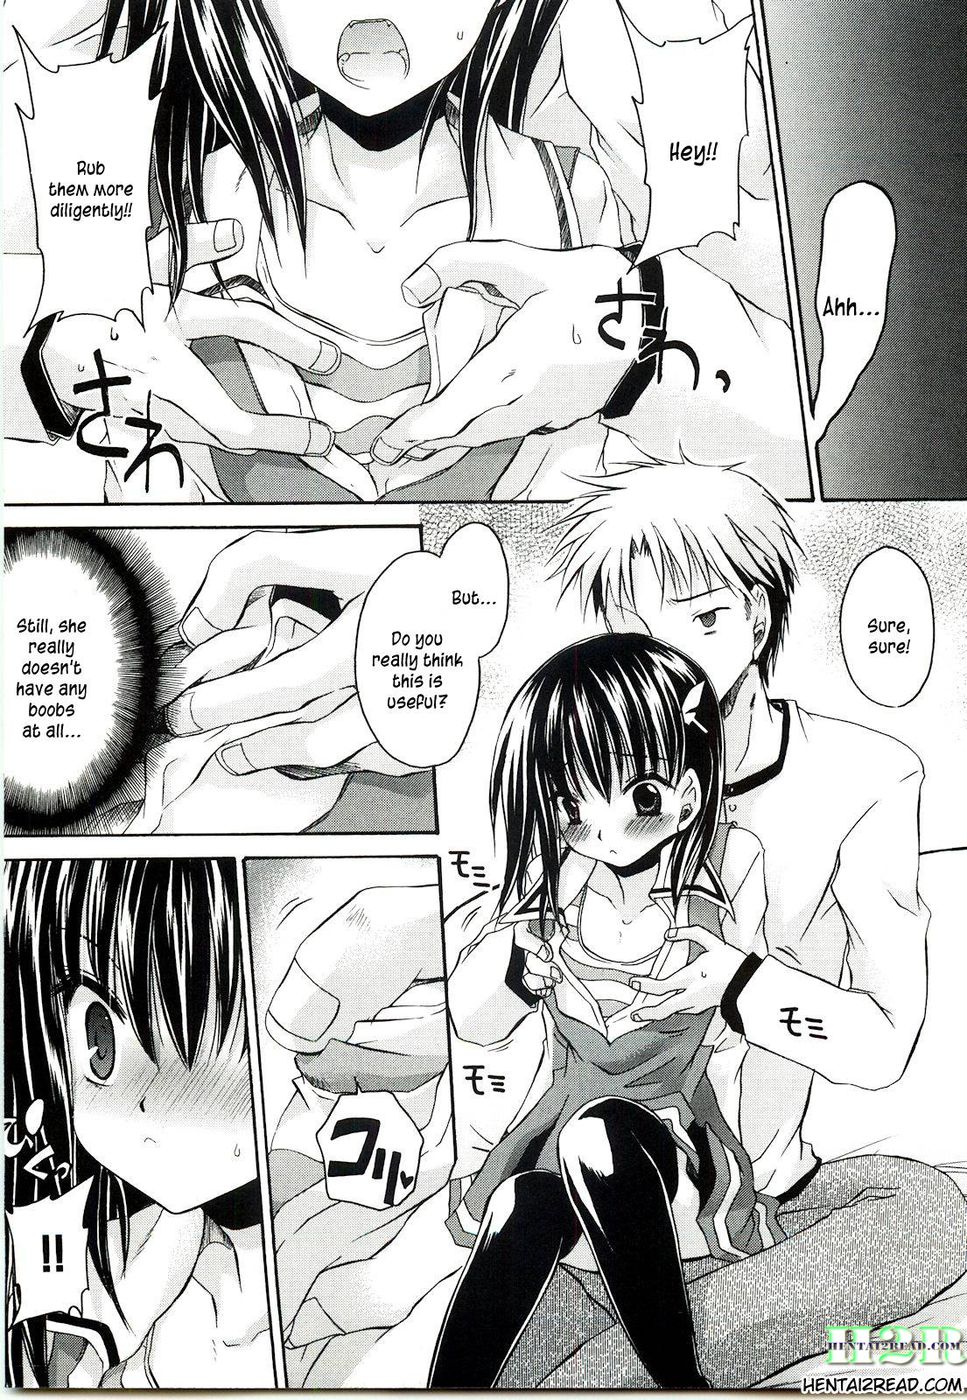 Hentai Manga Comic-Flat-Chested Girl-Read-5